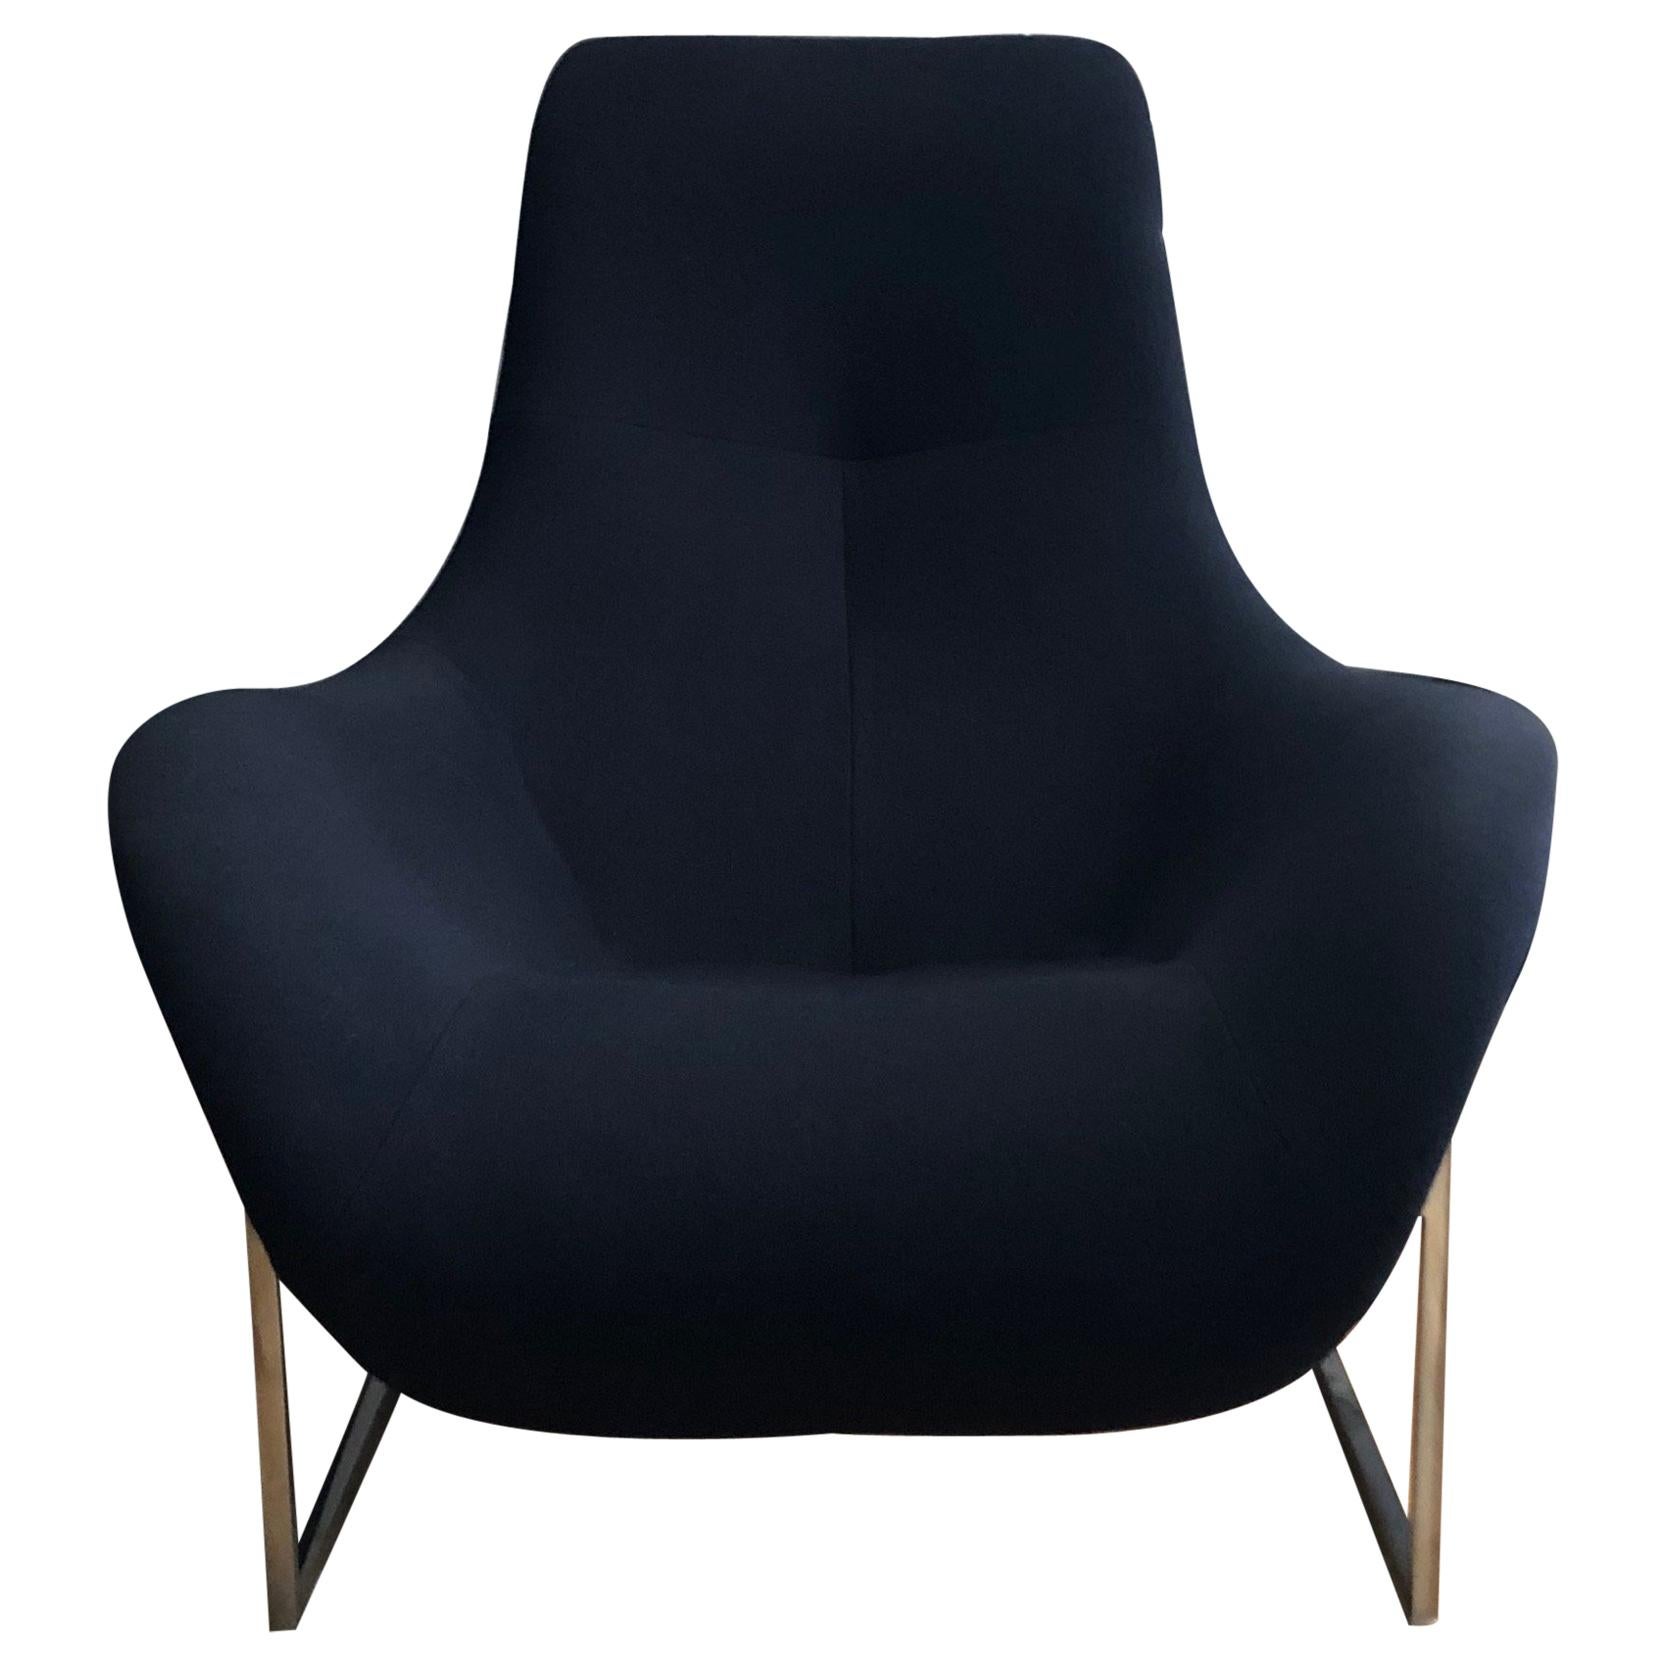 B&B Italia "Mart" Adjustable Lounge Chair by Antonio Citterio For Sale